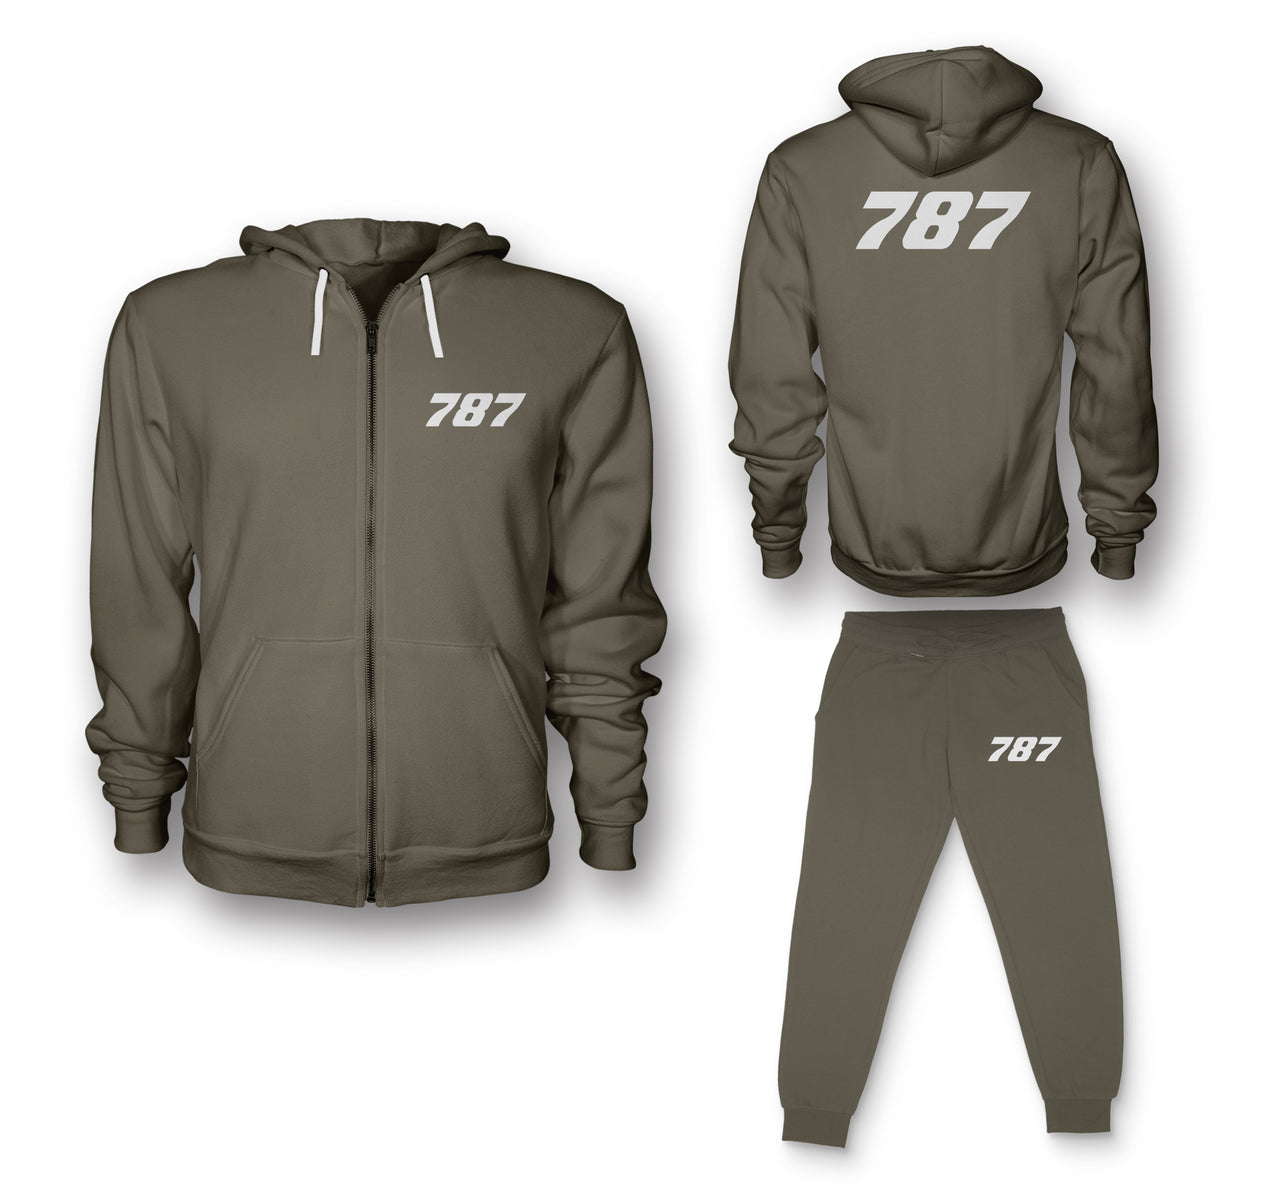 787 Flat Text Designed Zipped Hoodies & Sweatpants Set